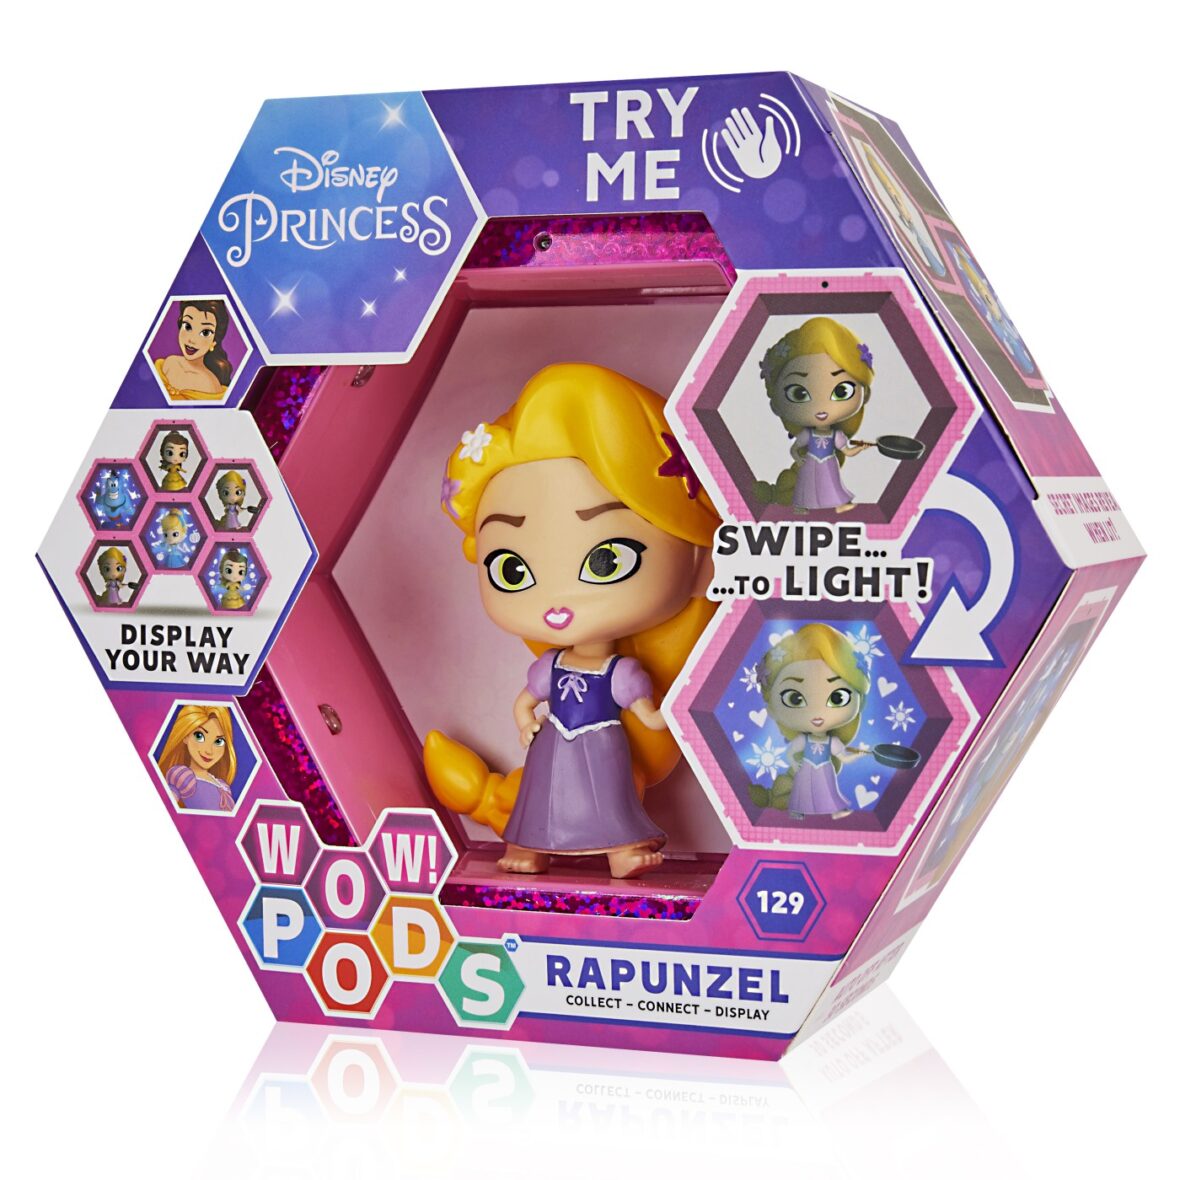 Wow! Pods – Disney Princess Rapunzel